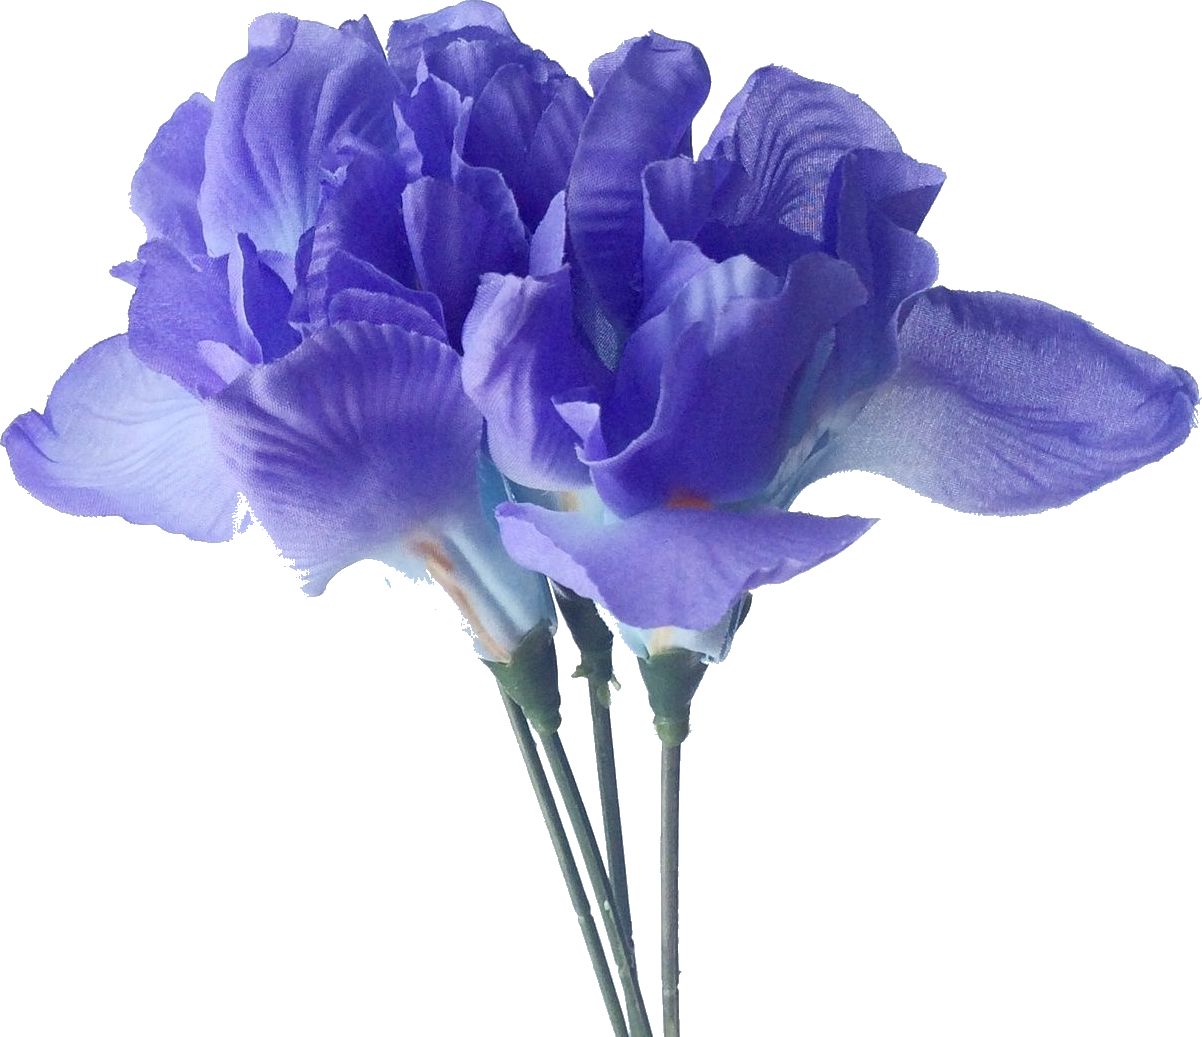 Dekorace květ Iris 1ks (9cm květ + stonek)